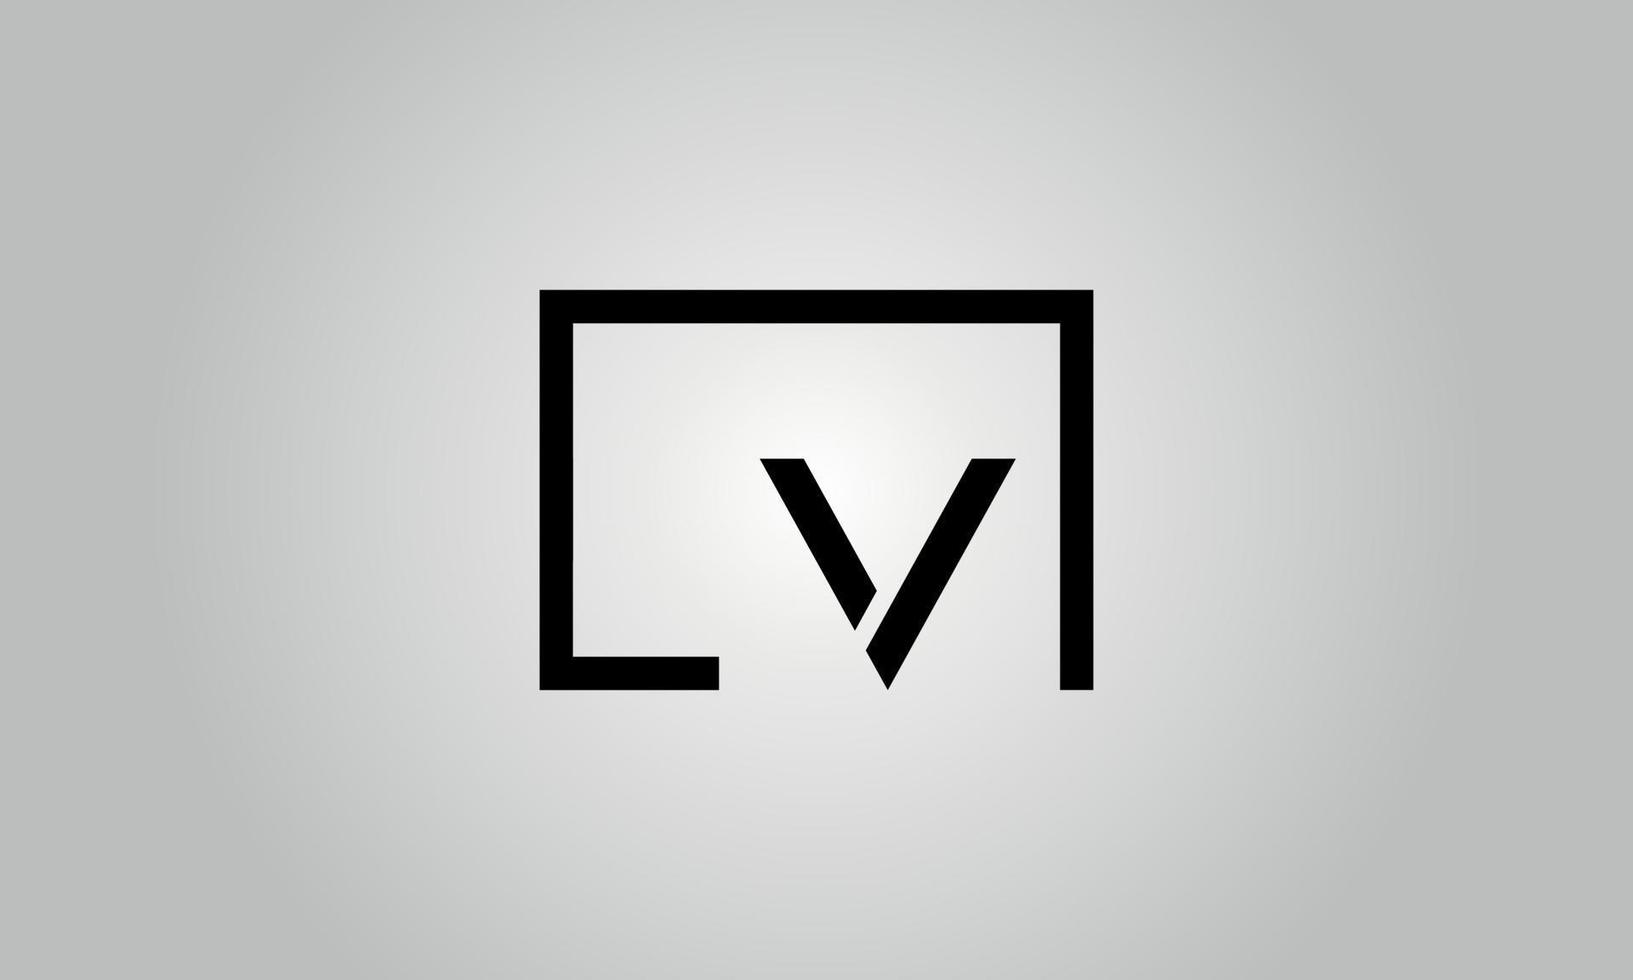 Letter LV logo design. LV logo with square shape in black colors